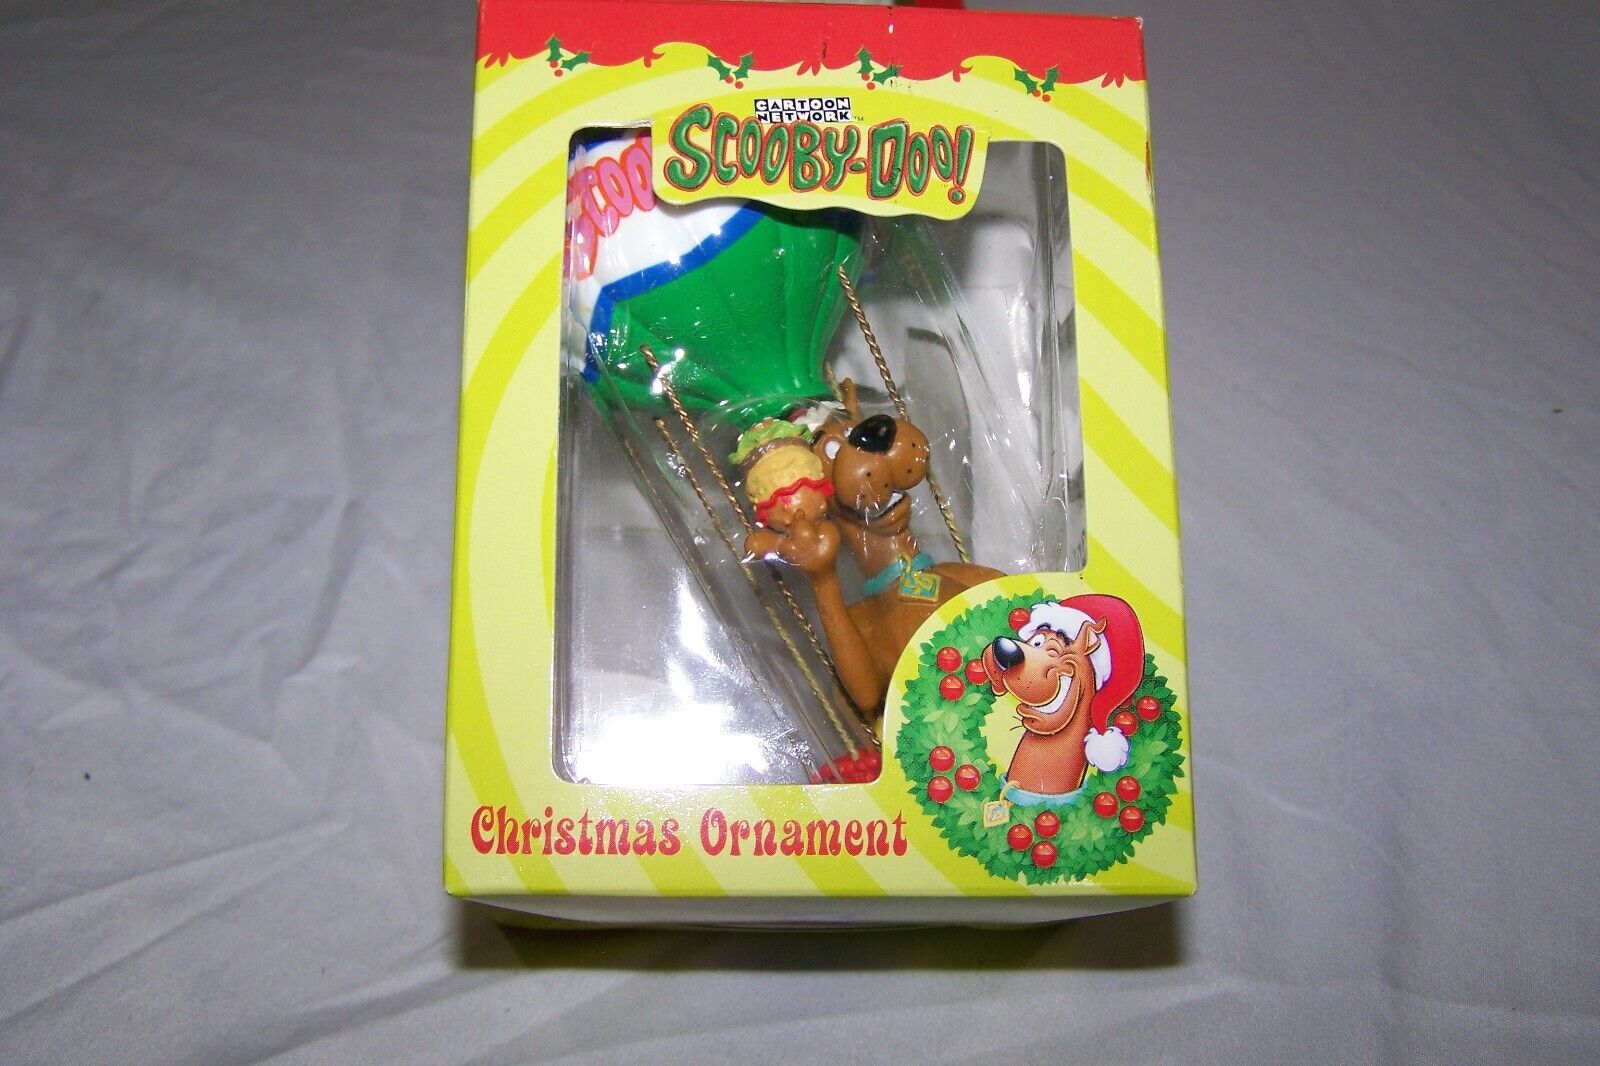 Scooby-Doo vintage Hot Air Balloon ornament Christmas Trevco Cartoon 1998